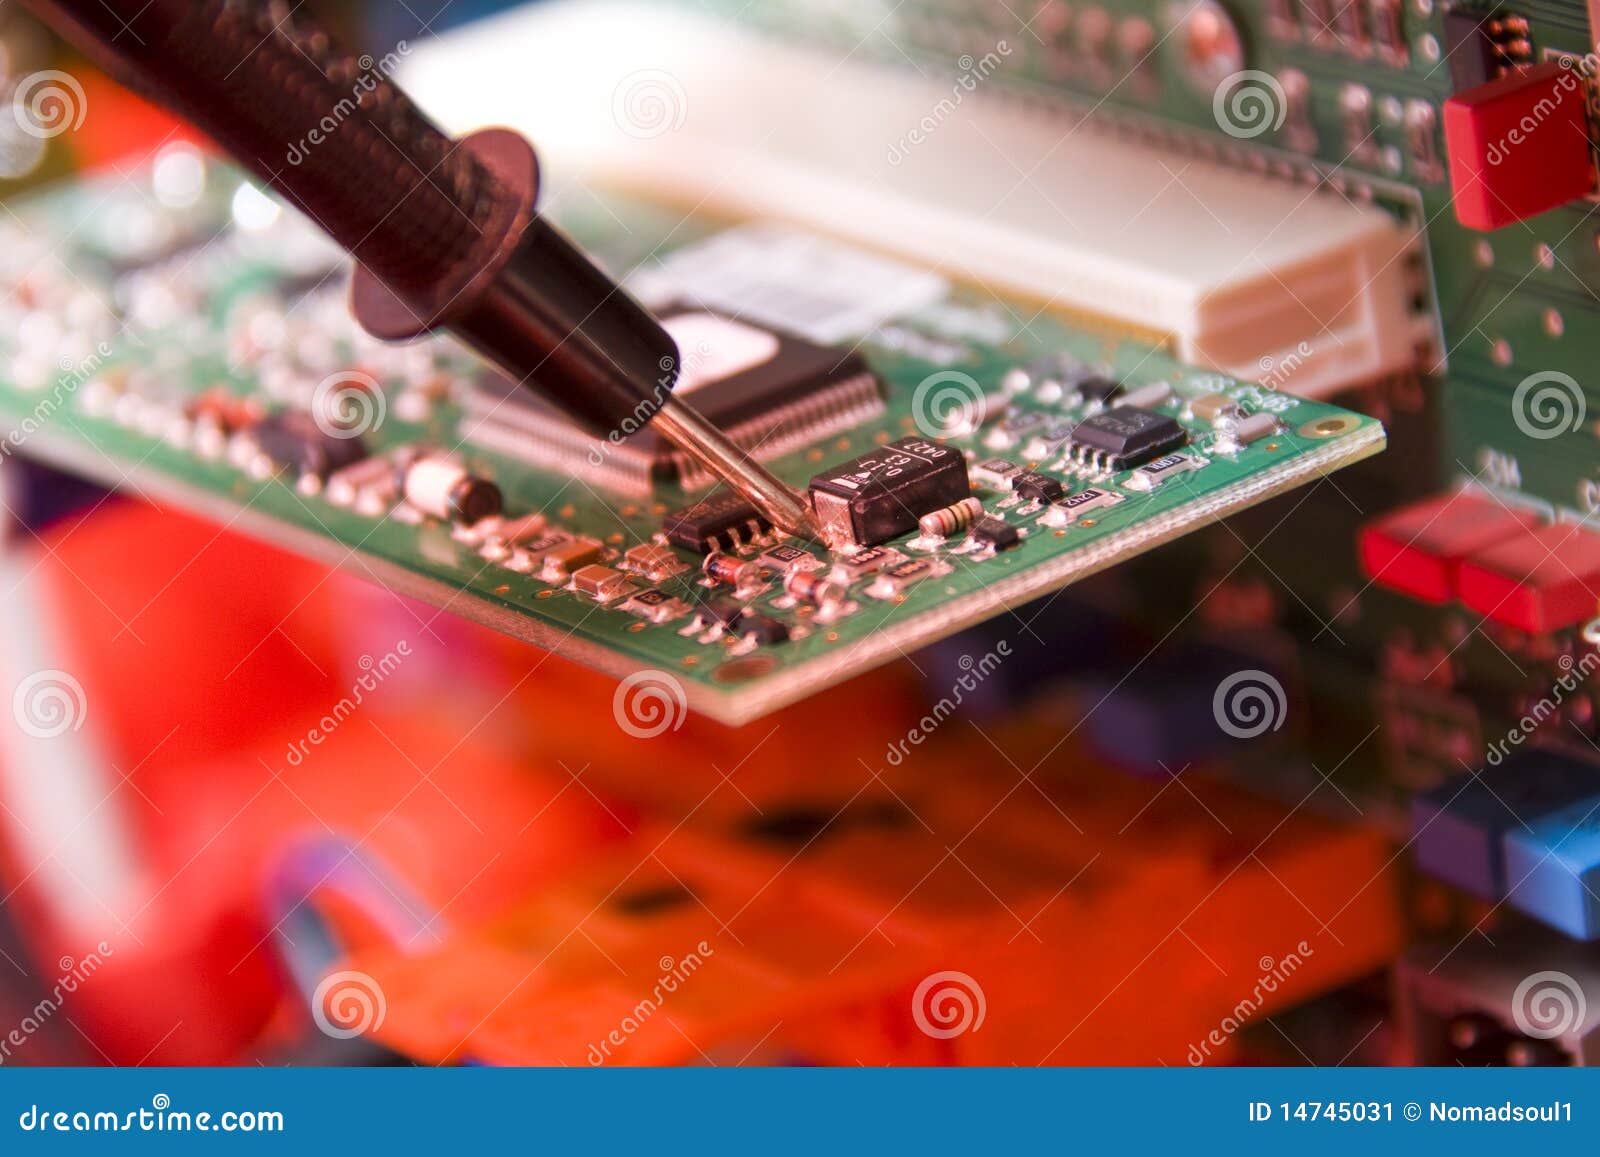 electronics. engineer at work